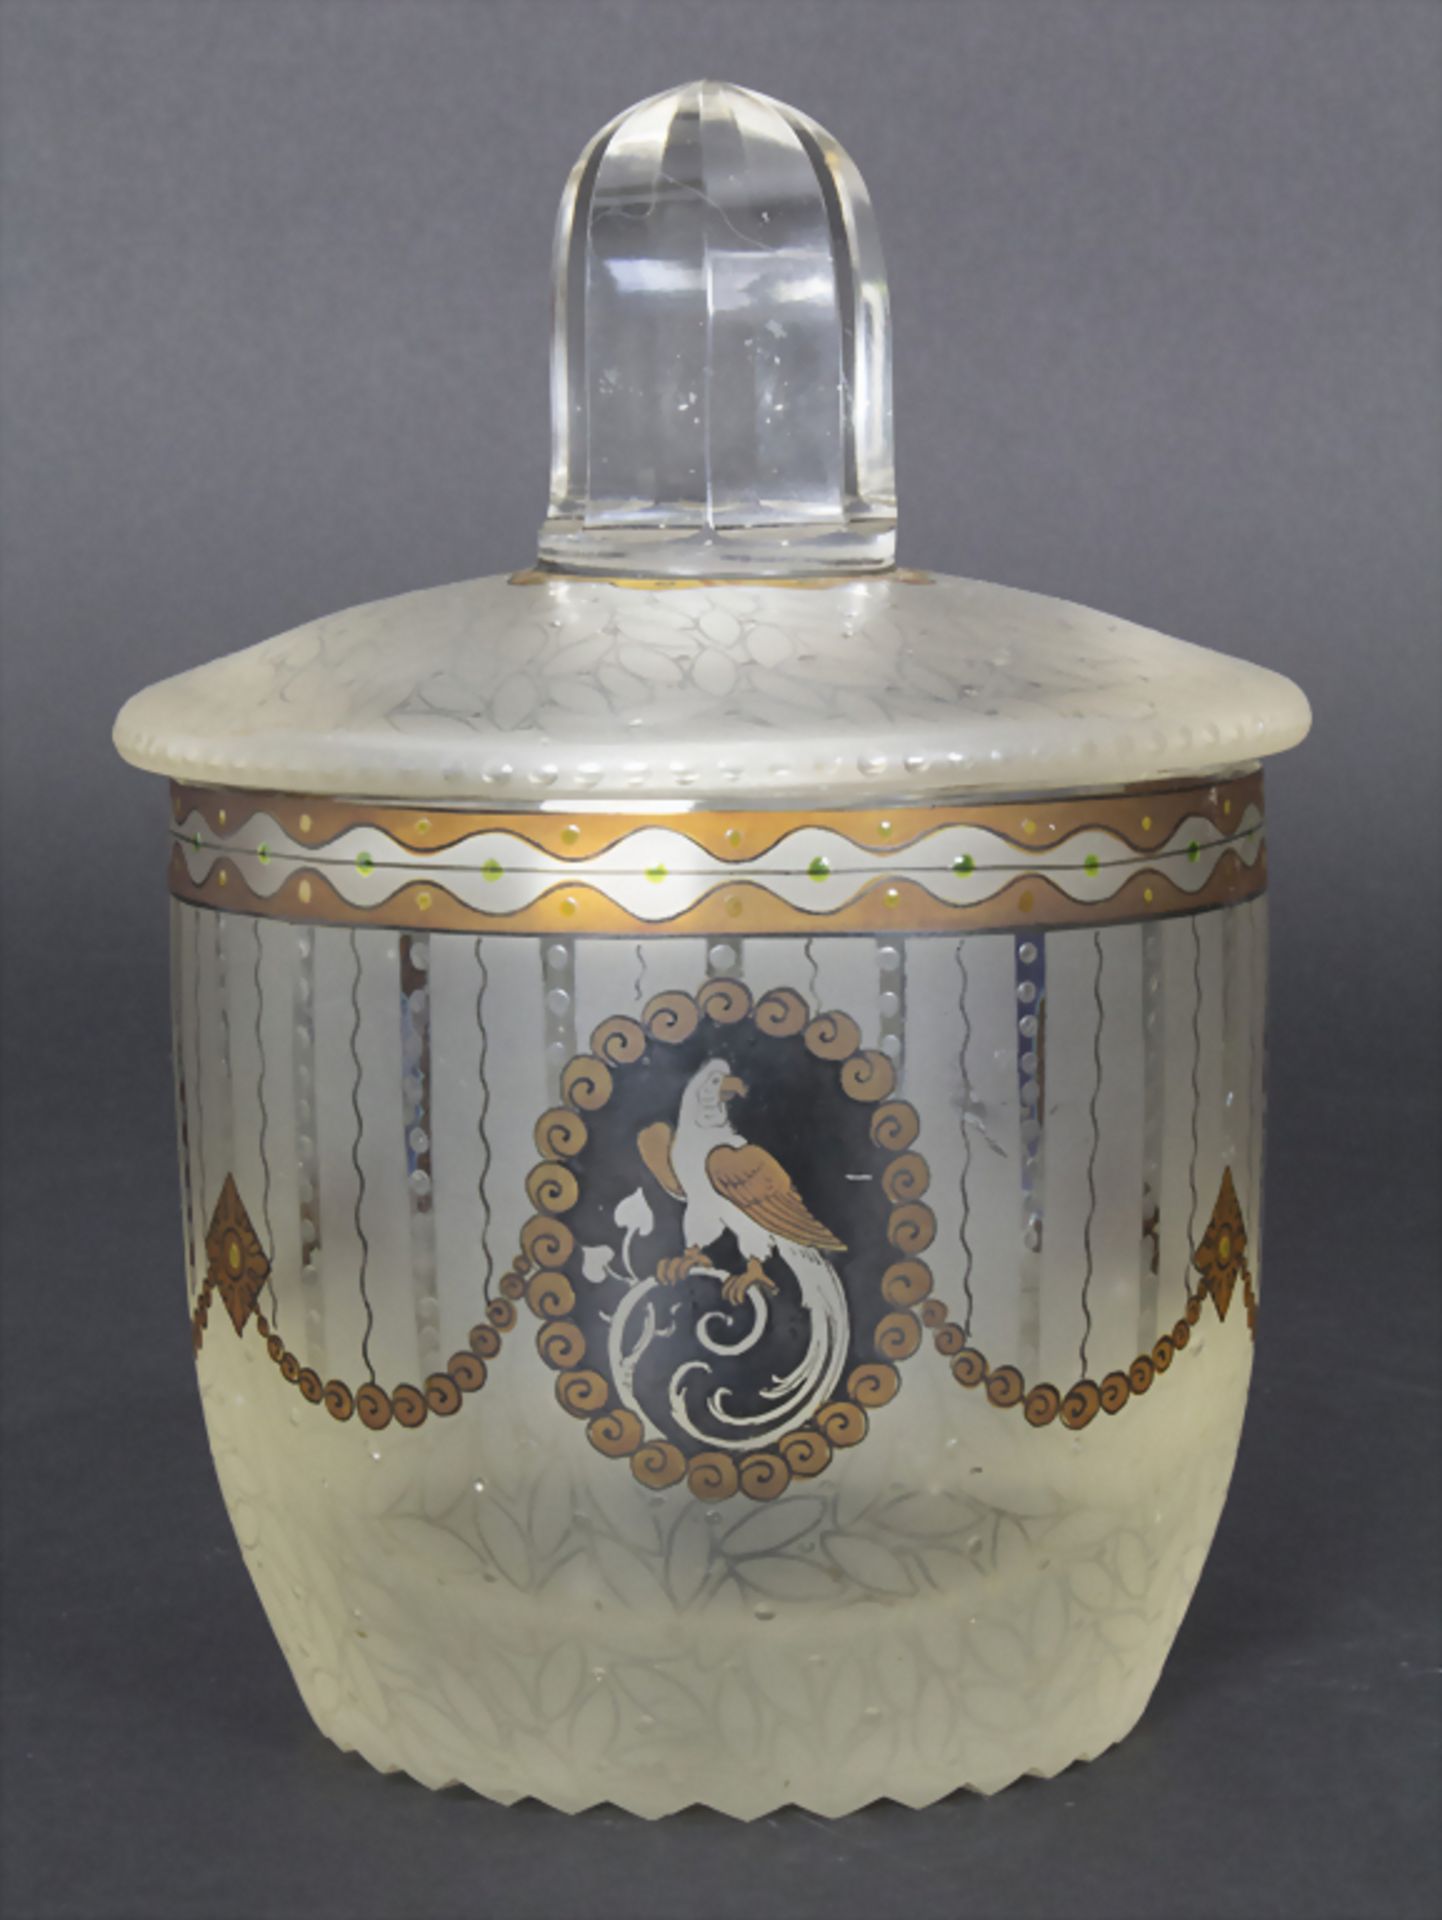 Jugendstil Deckelgefäß mit Transparentemaildekor / An Art Nouveau covered bowl with transparen - Bild 3 aus 5